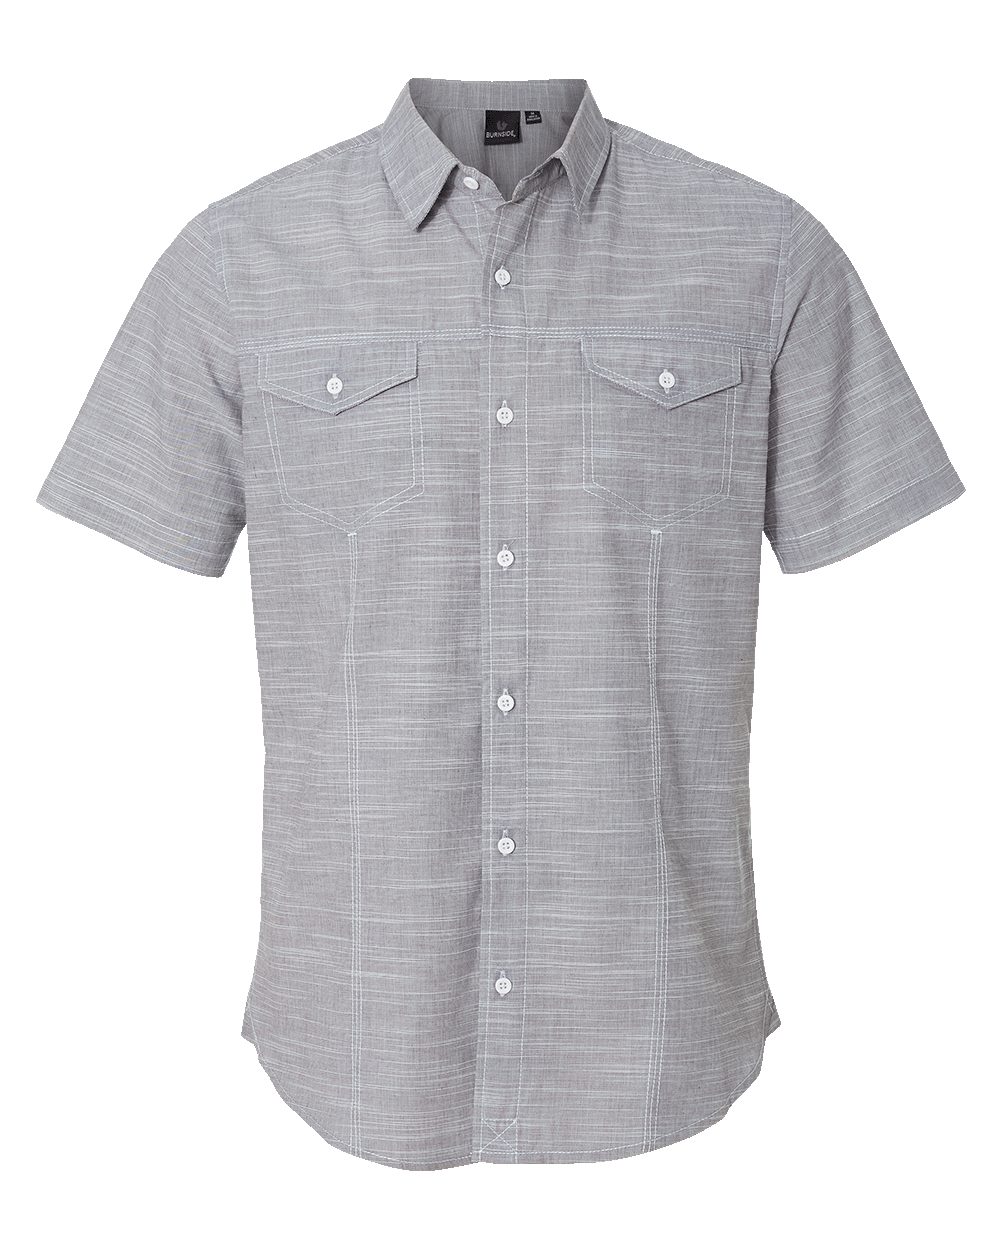 B9247 Burnside Textured Solid Short Sleeve Shirt